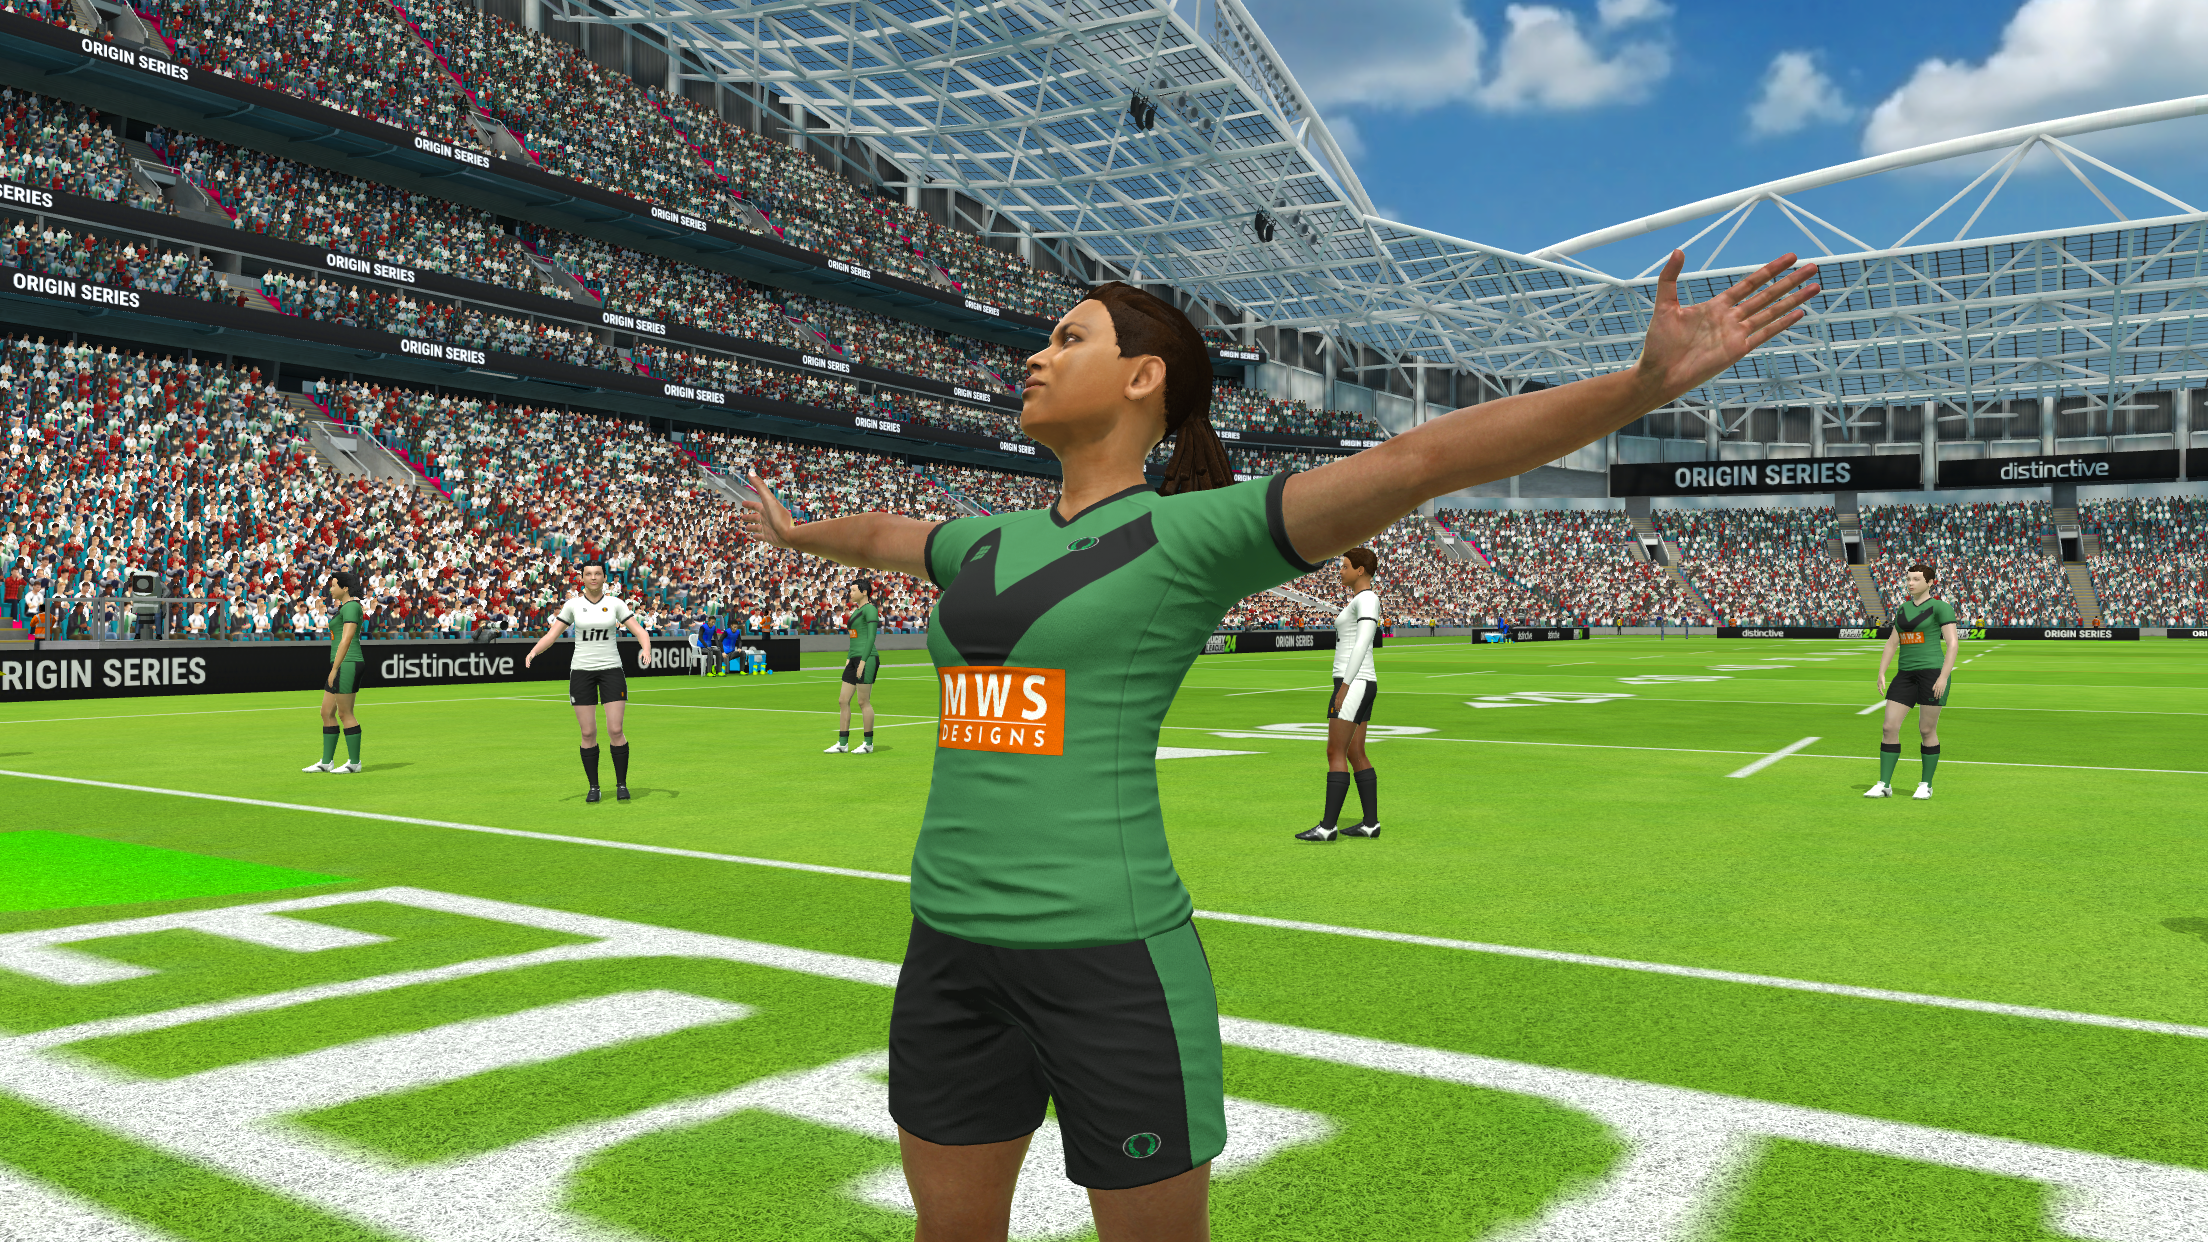 Screenshot of Rugby League 24